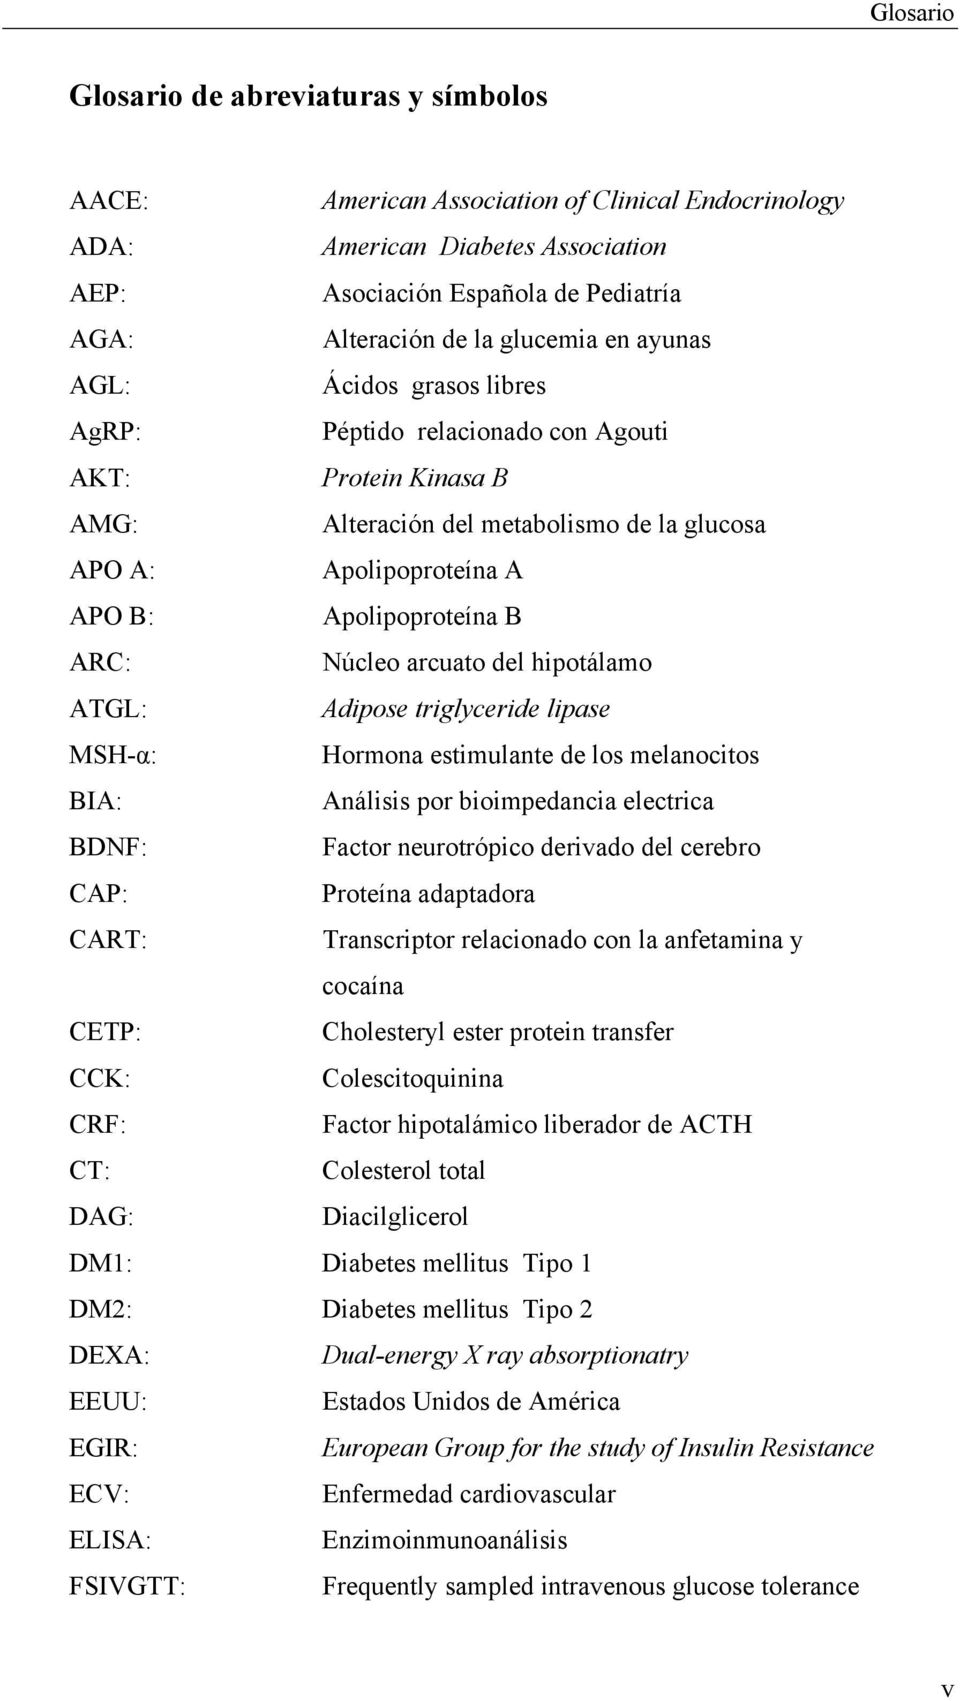 ARC: Núcleo arcuato del hipotálamo ATGL: Adipose triglyceride lipase MSH-α: Hormona estimulante de los melanocitos BIA: Análisis por bioimpedancia electrica BDNF: Factor neurotrópico derivado del